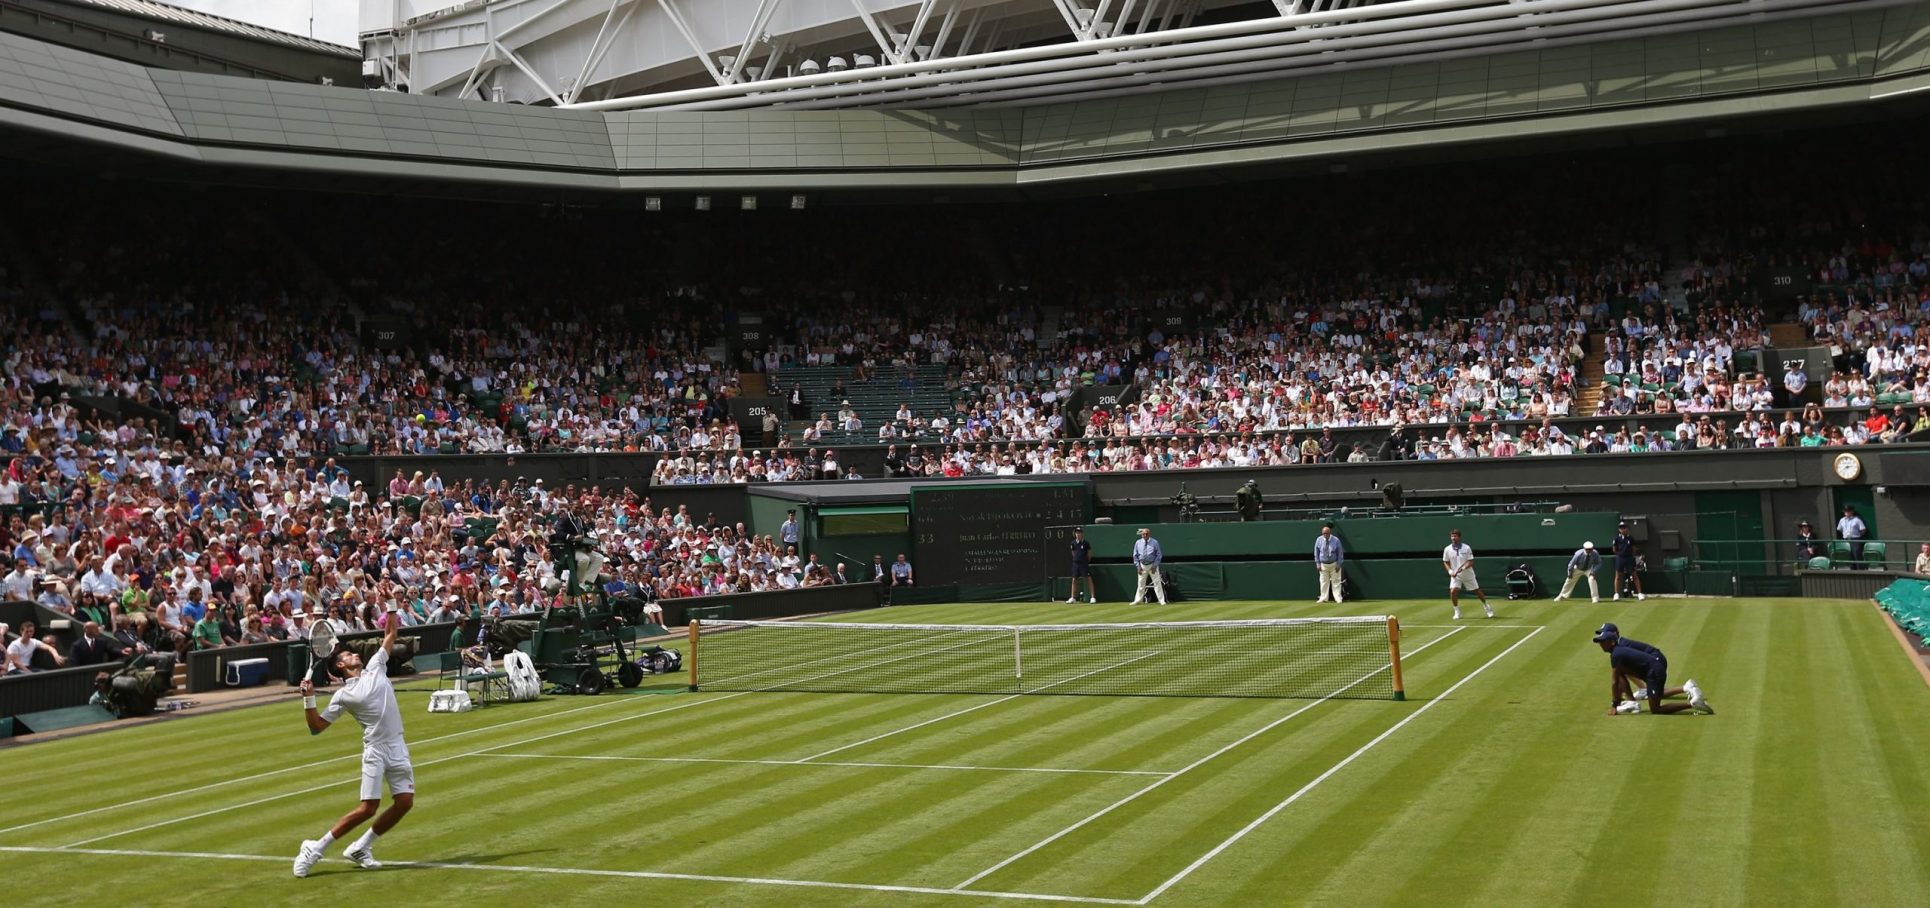 Coronavirus amenaza el torneo de tenis de Wimbledon